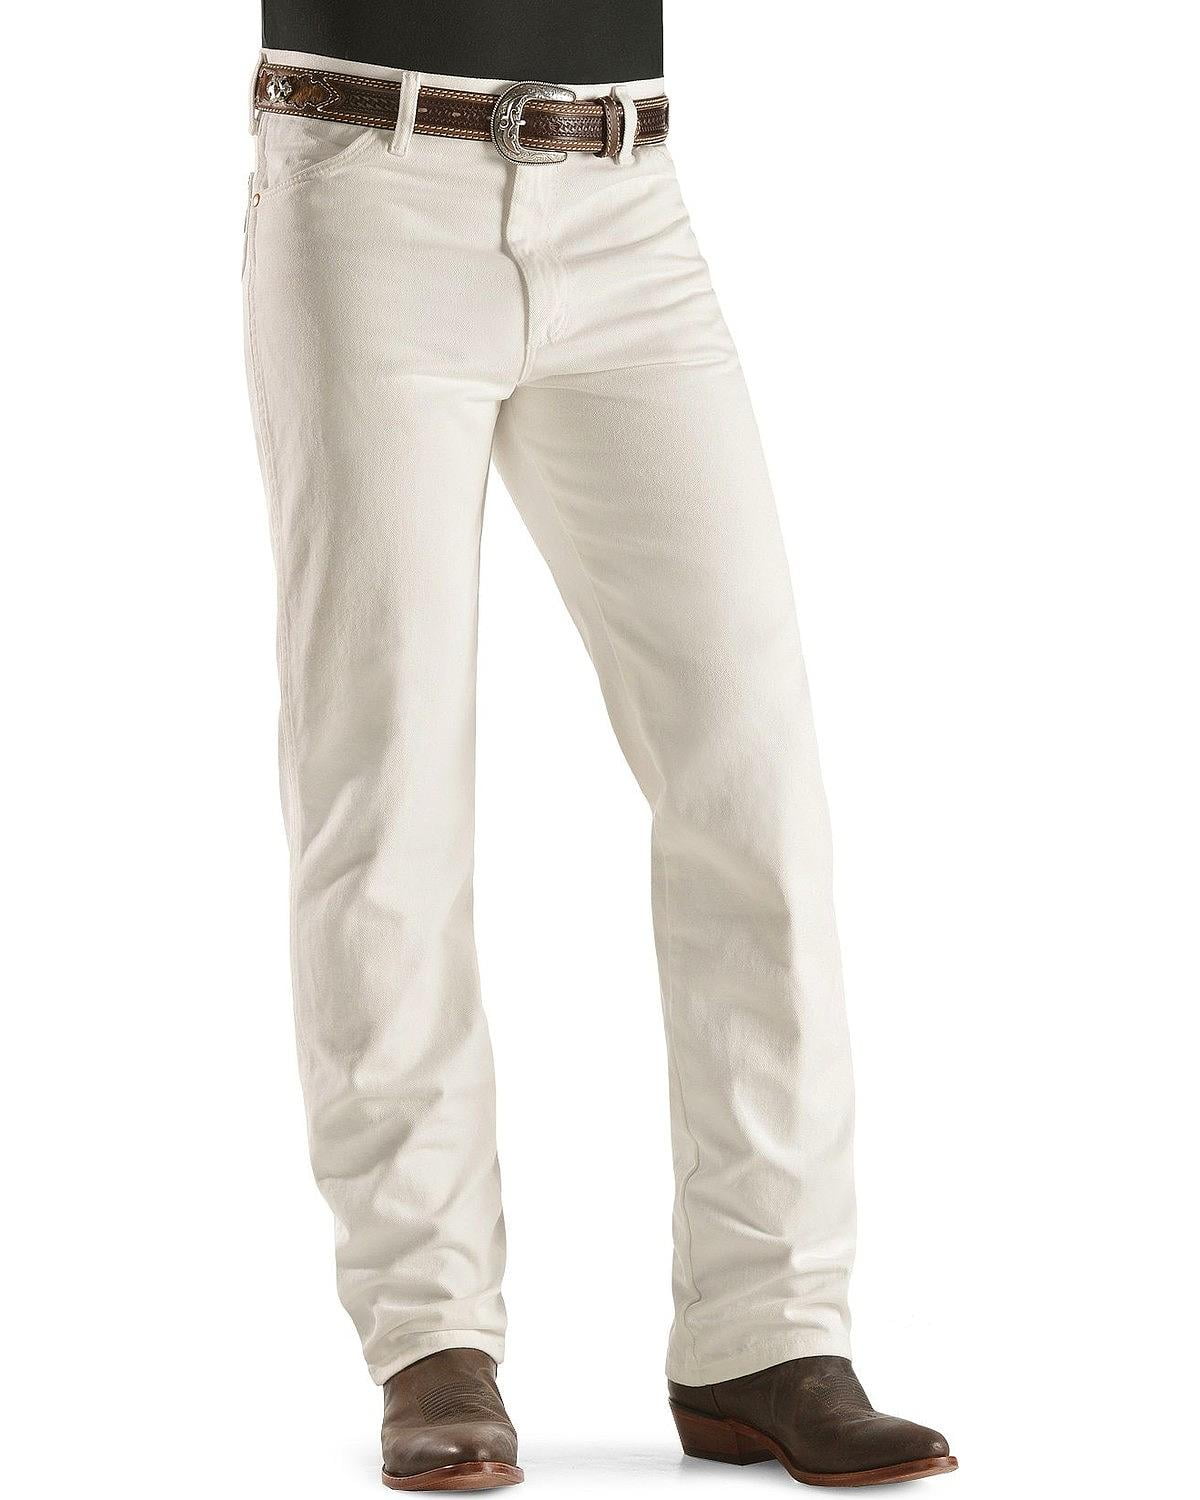 colored wrangler jeans mens